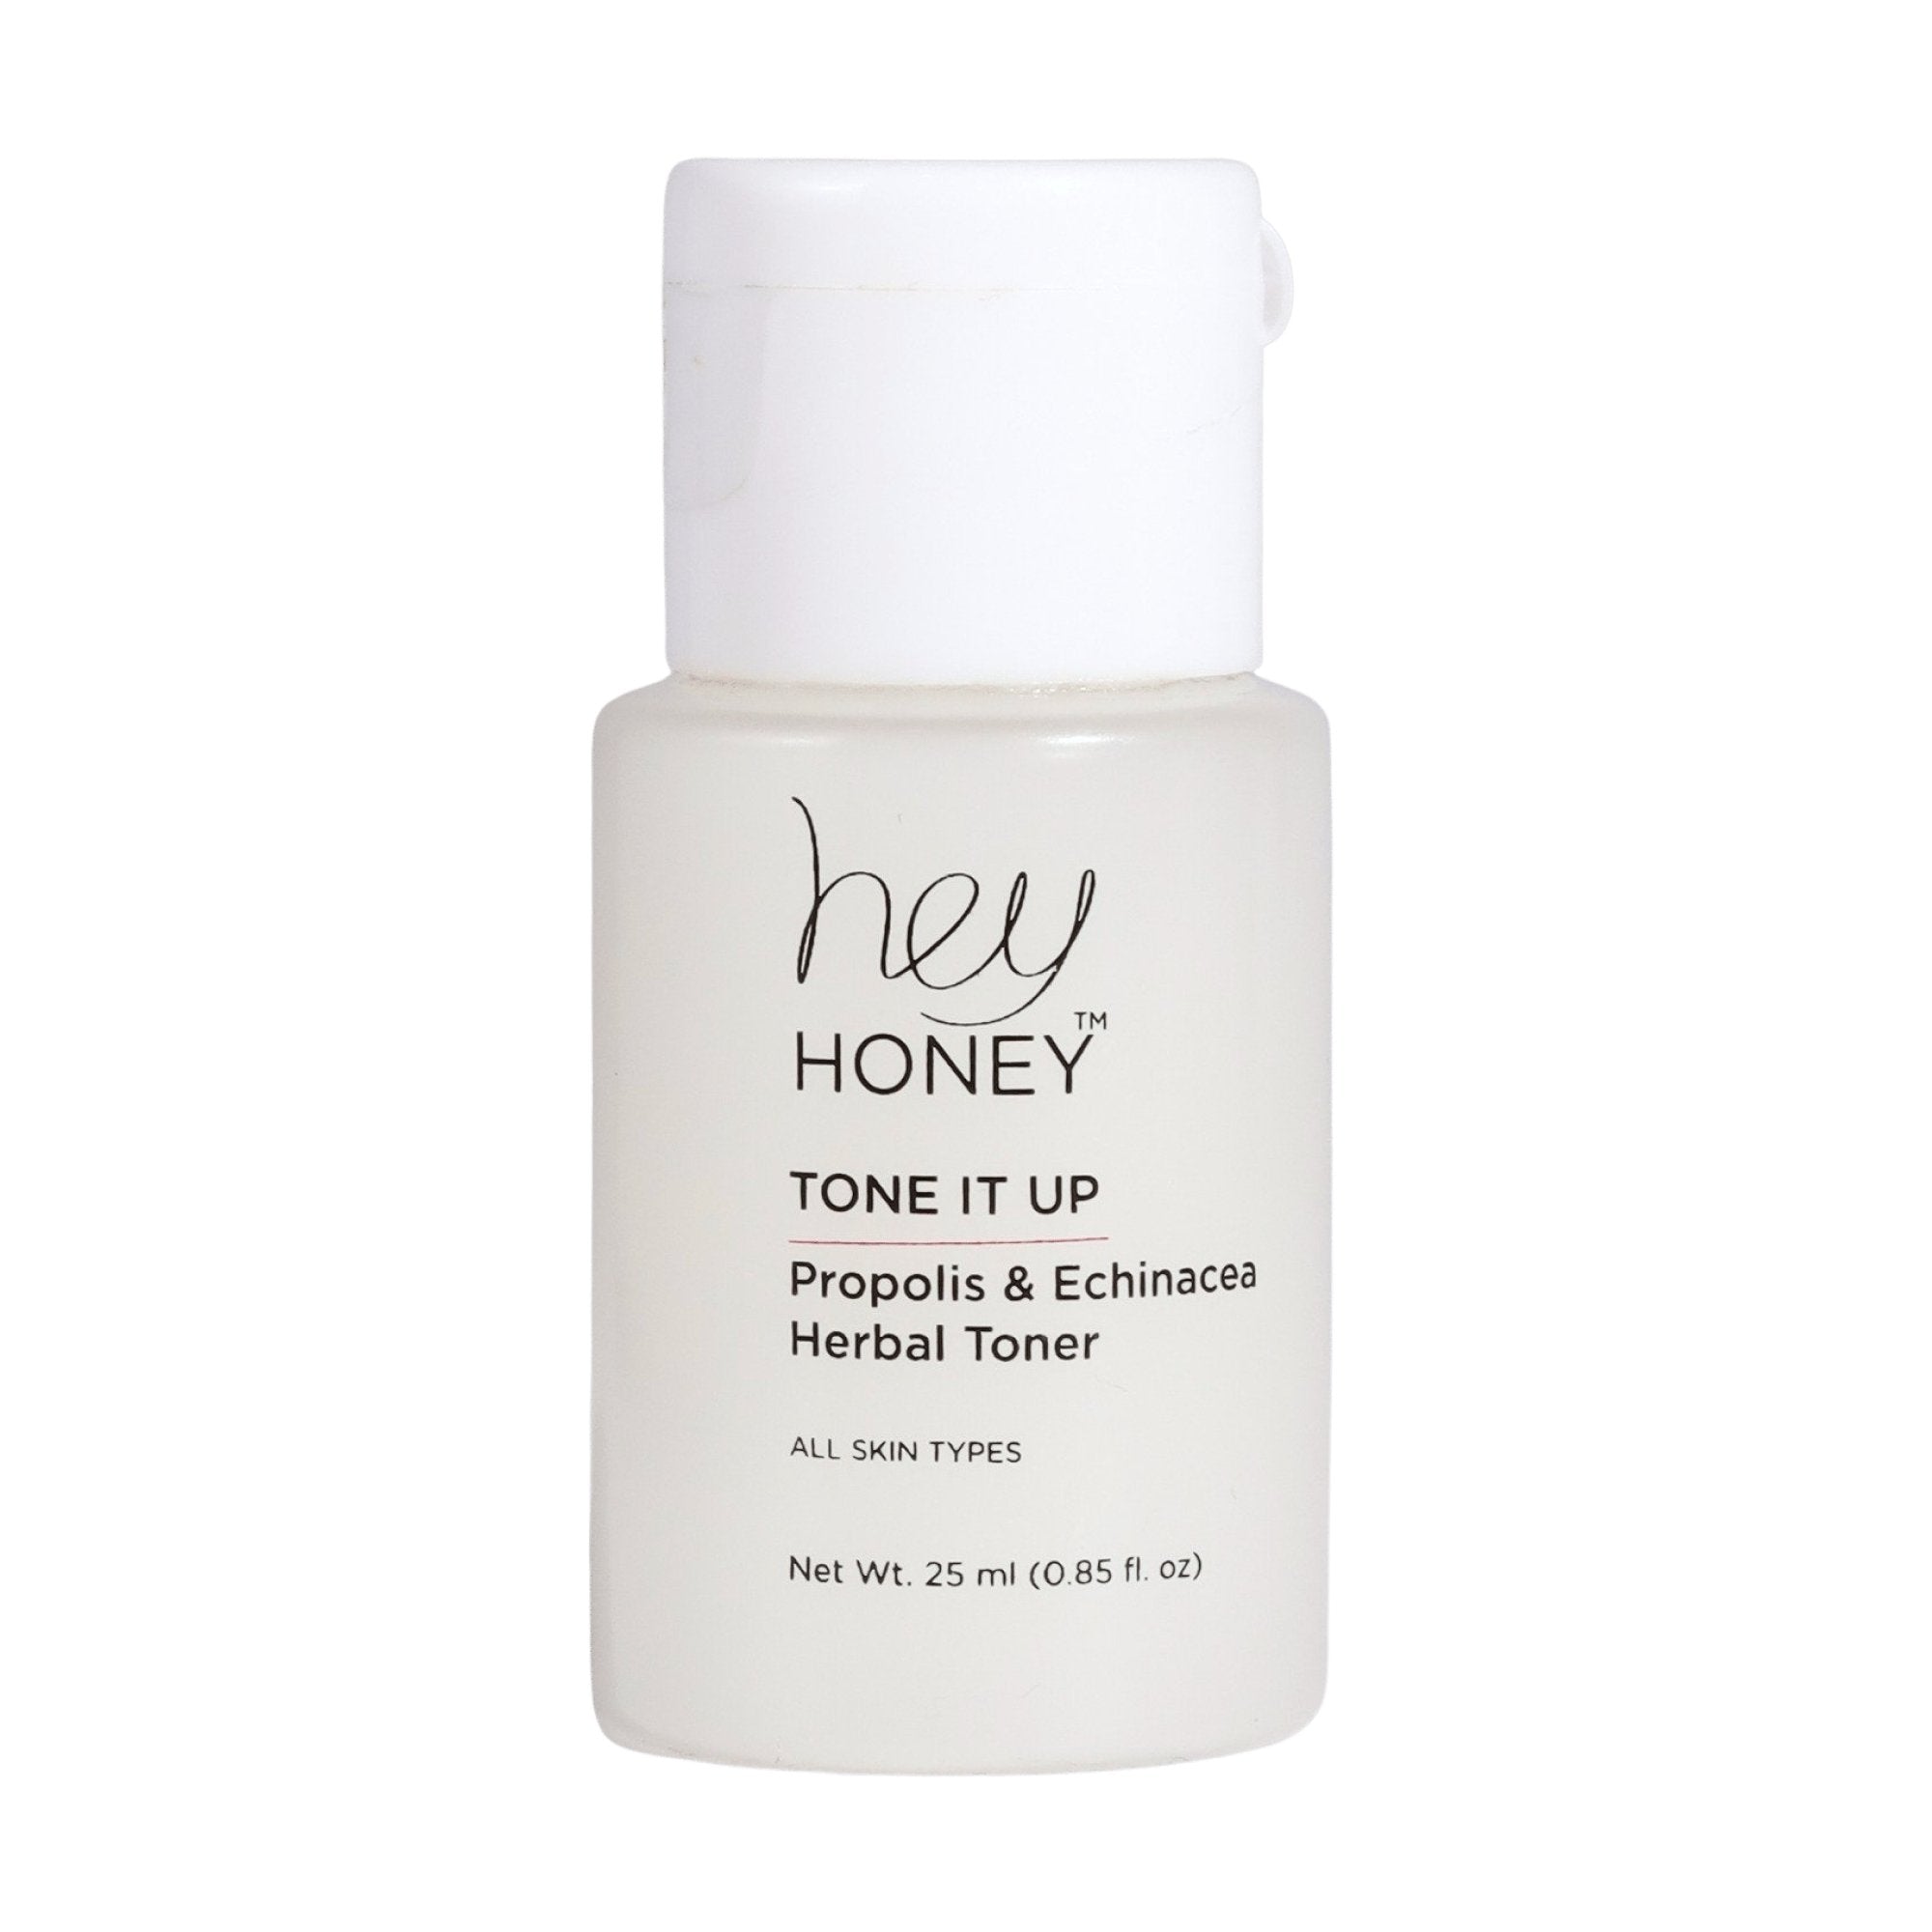 Tone It Up Propolis & Echinacea Herbal Toner Deluxe 25mL - Hey Honey Skin Care